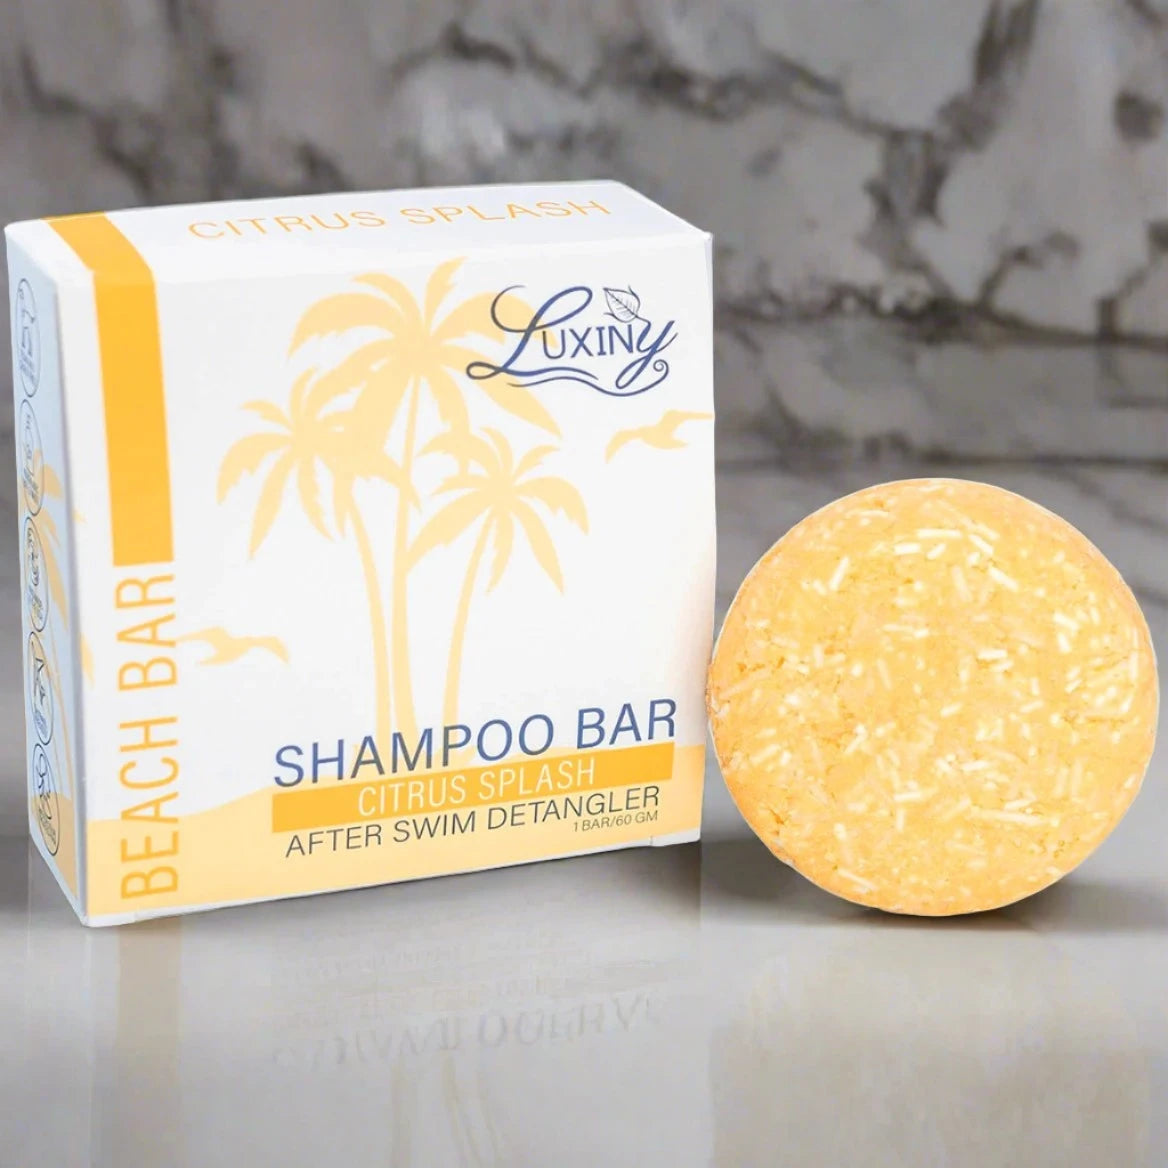 Luxiny Citrus Splash Shampoo Bar - Beach Bar